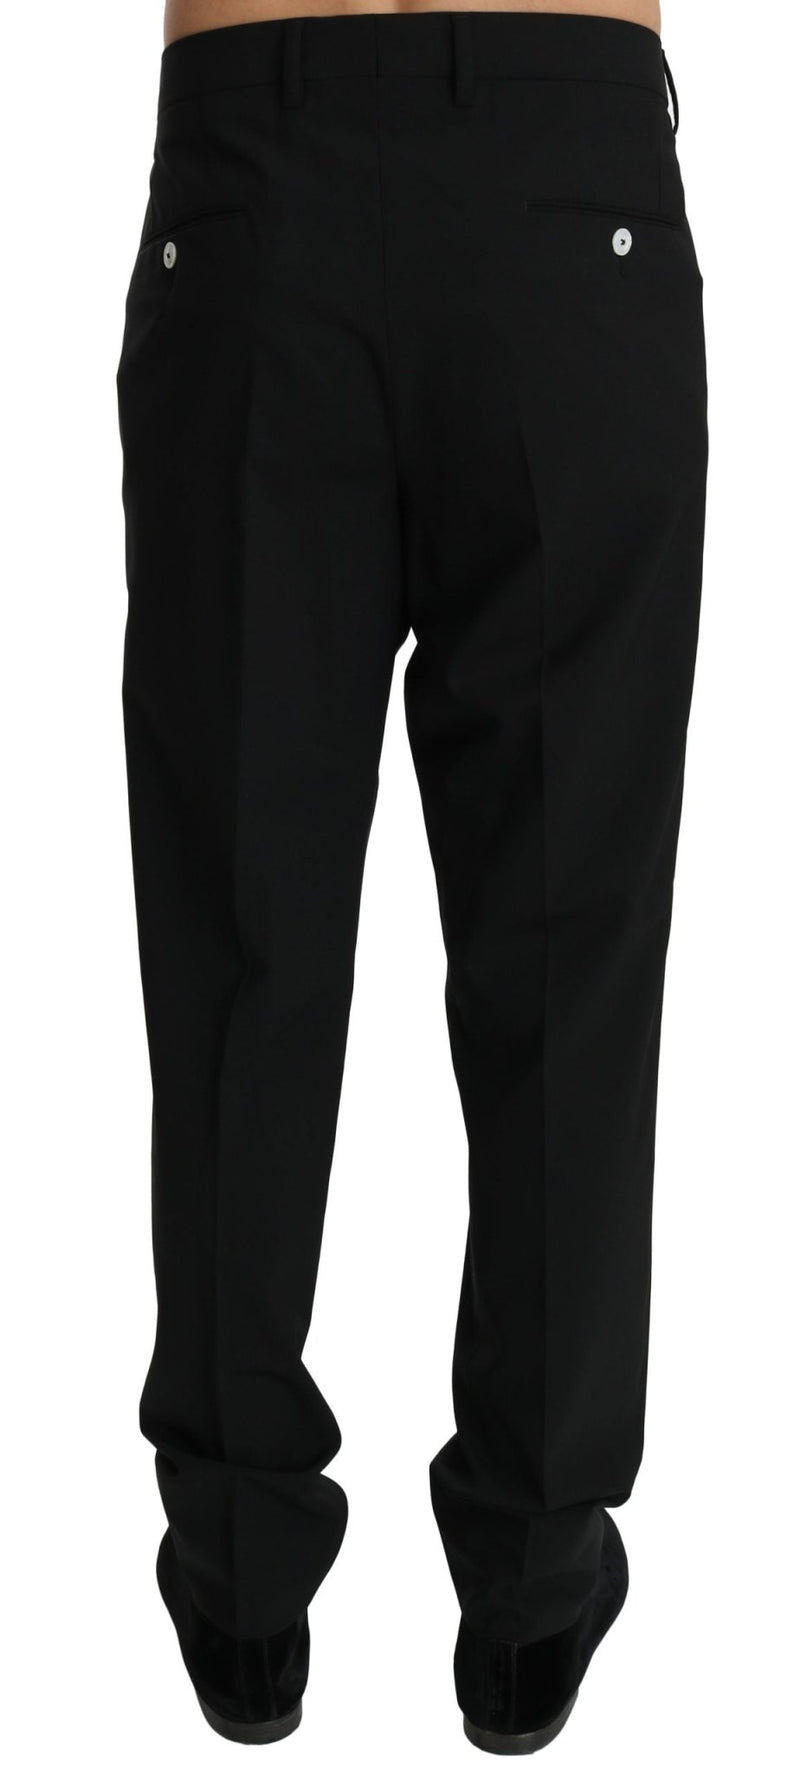 Black Skinny Dress Trouser Wool Stretch Pants - Avaz Shop